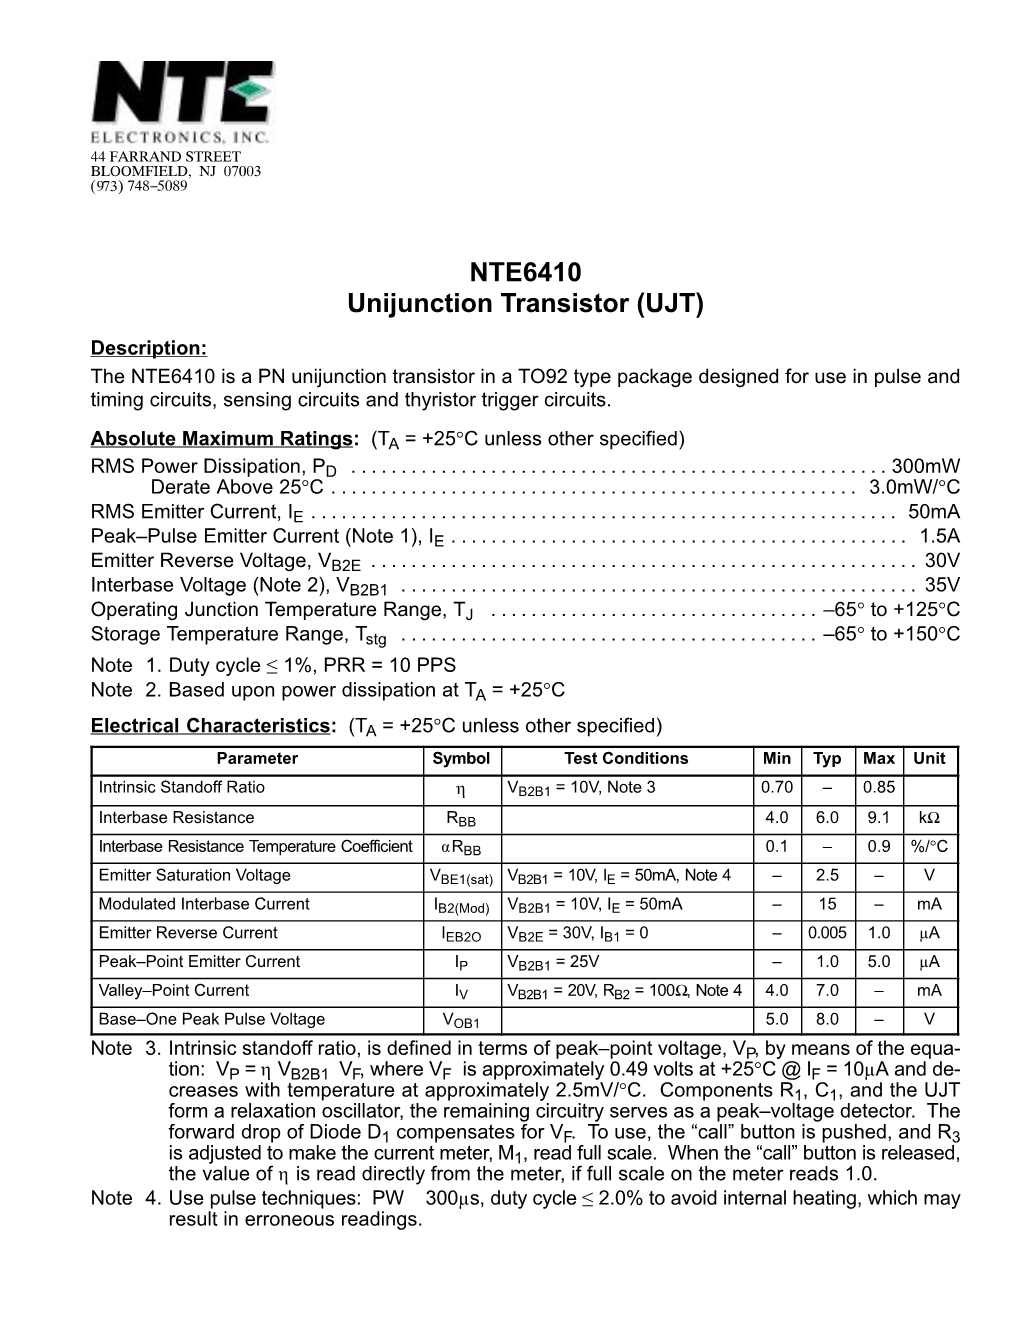 NTE6410 Unijunction Transistor (UJT)